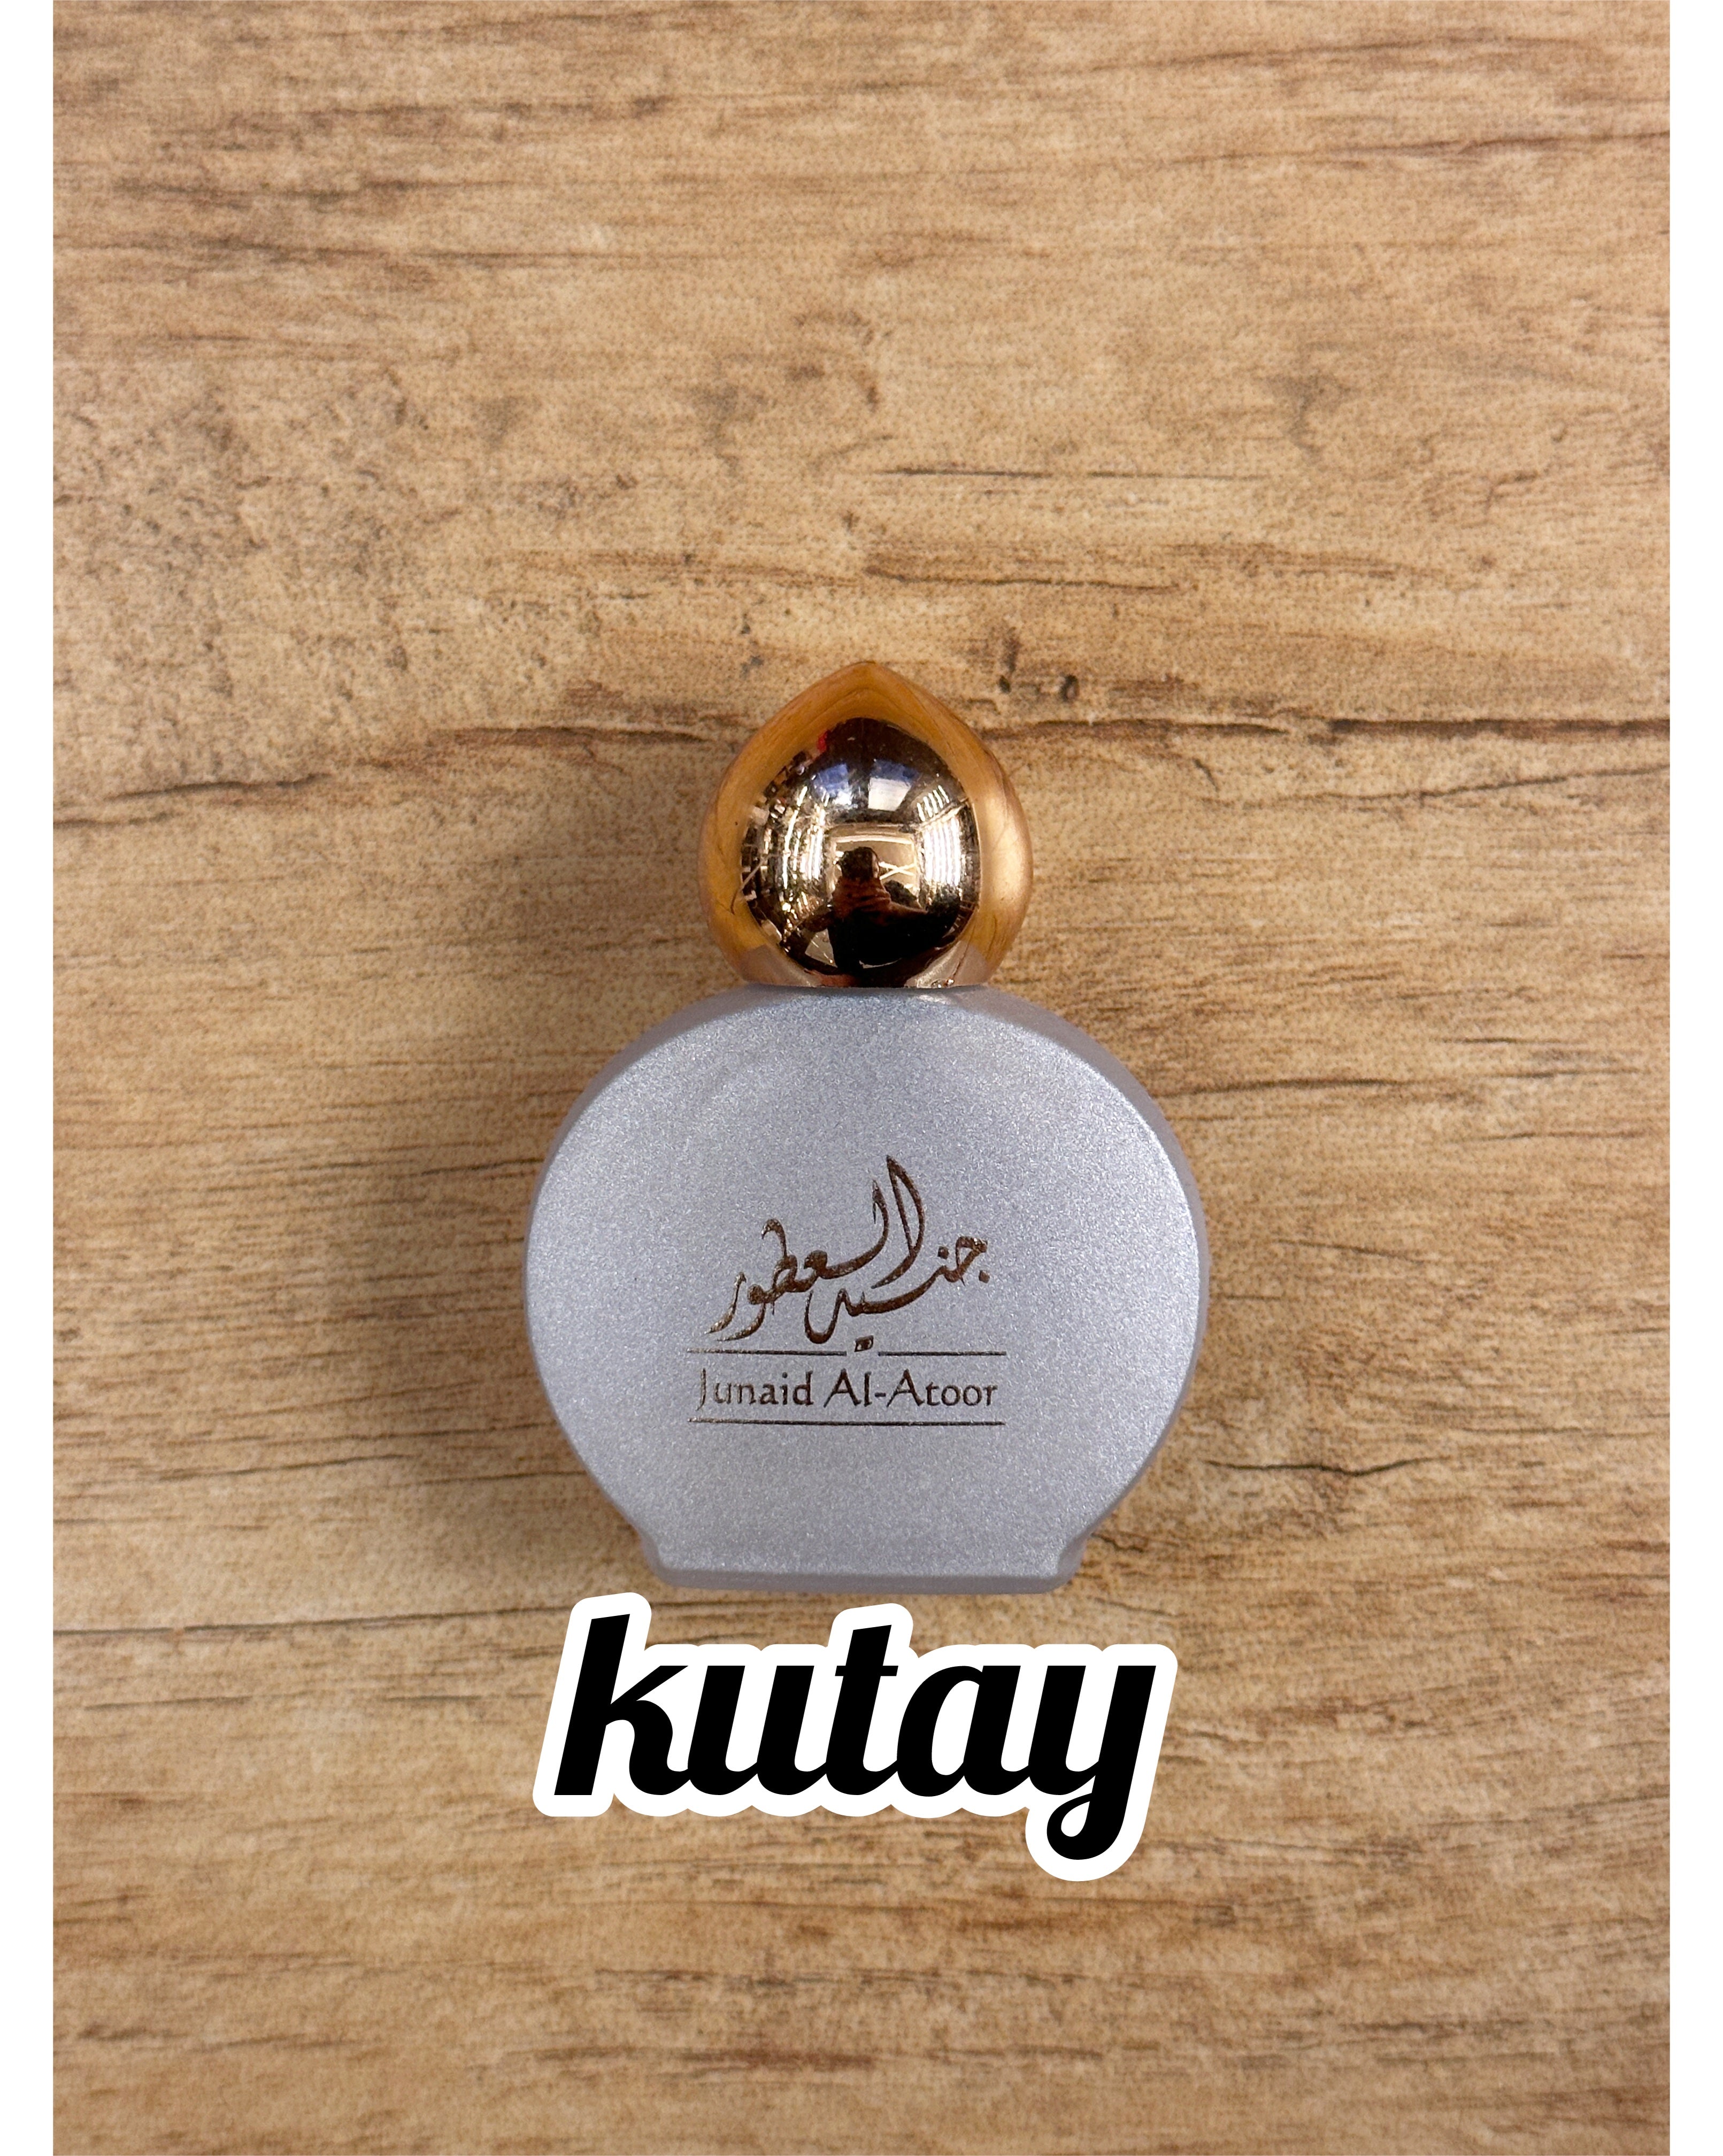 Kutay by Junaid al atoor